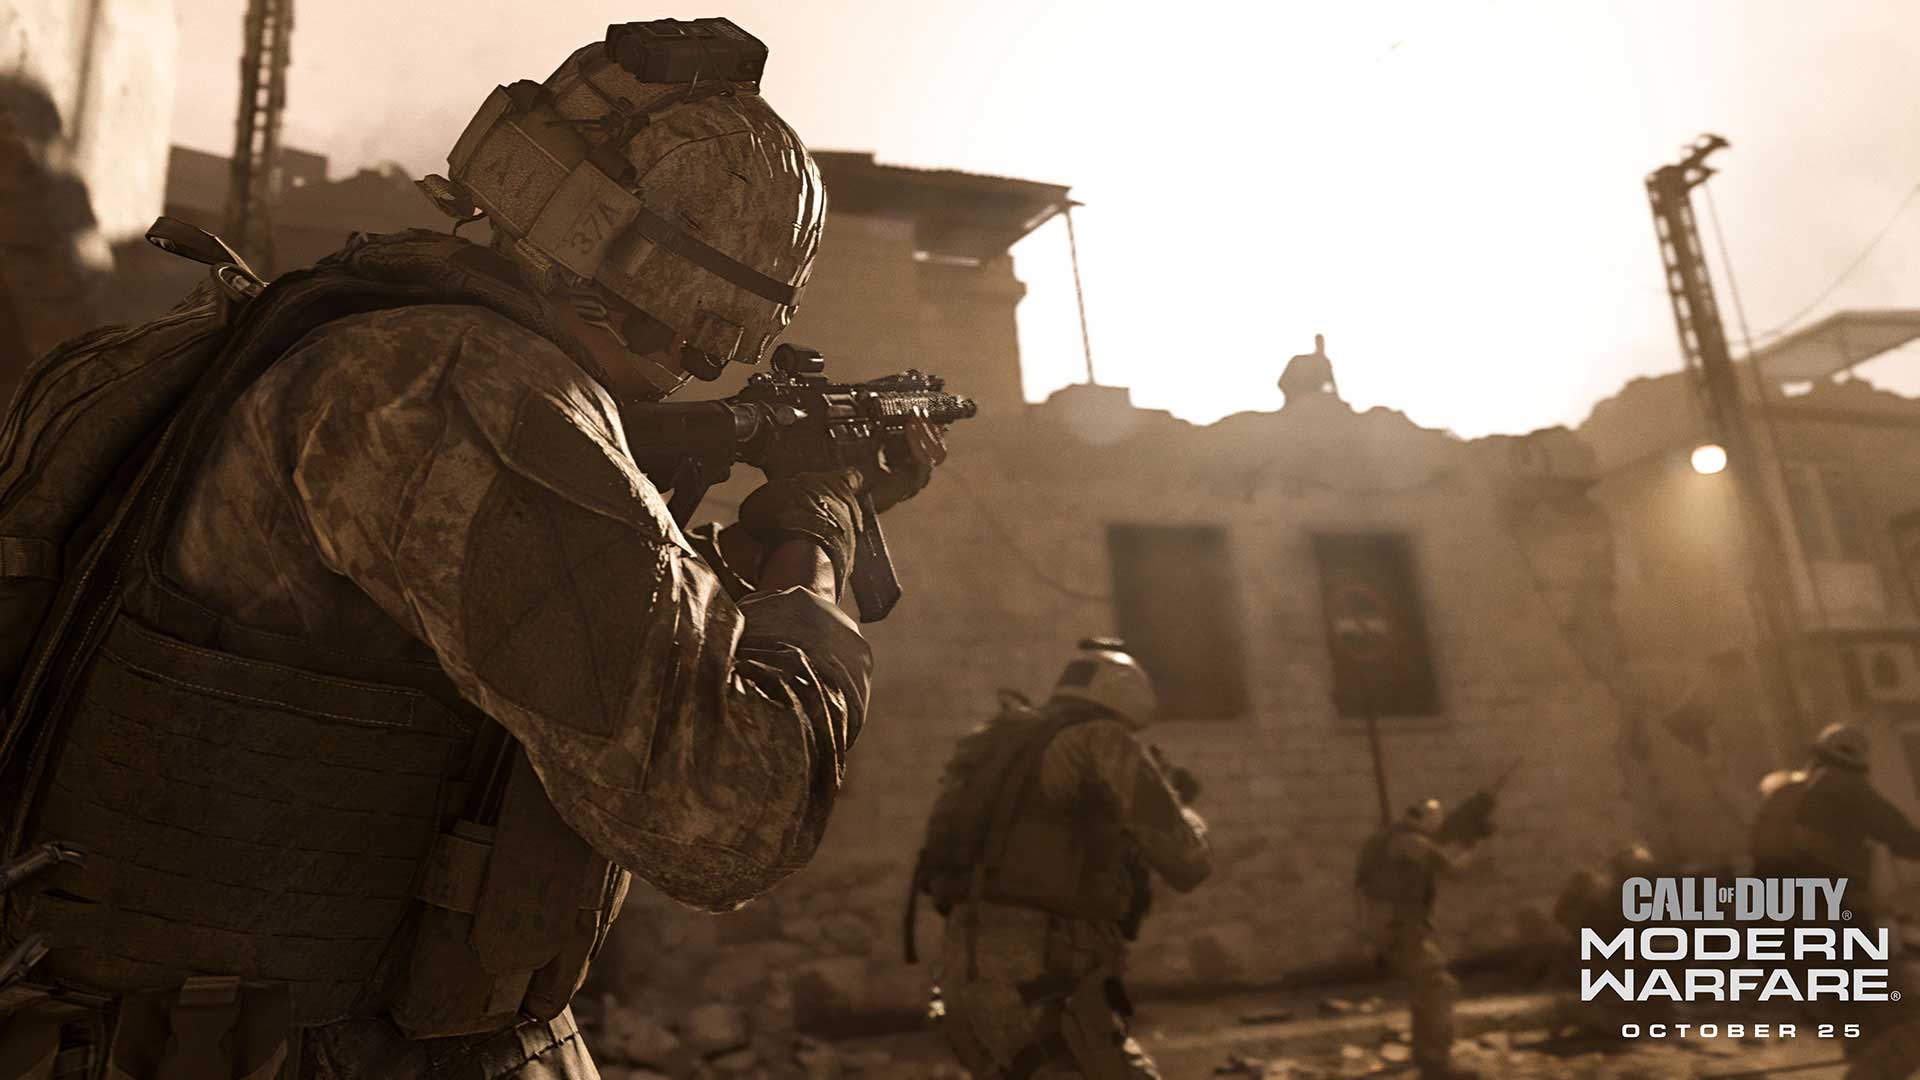 Call of Duty Modern Warfare Soldiers